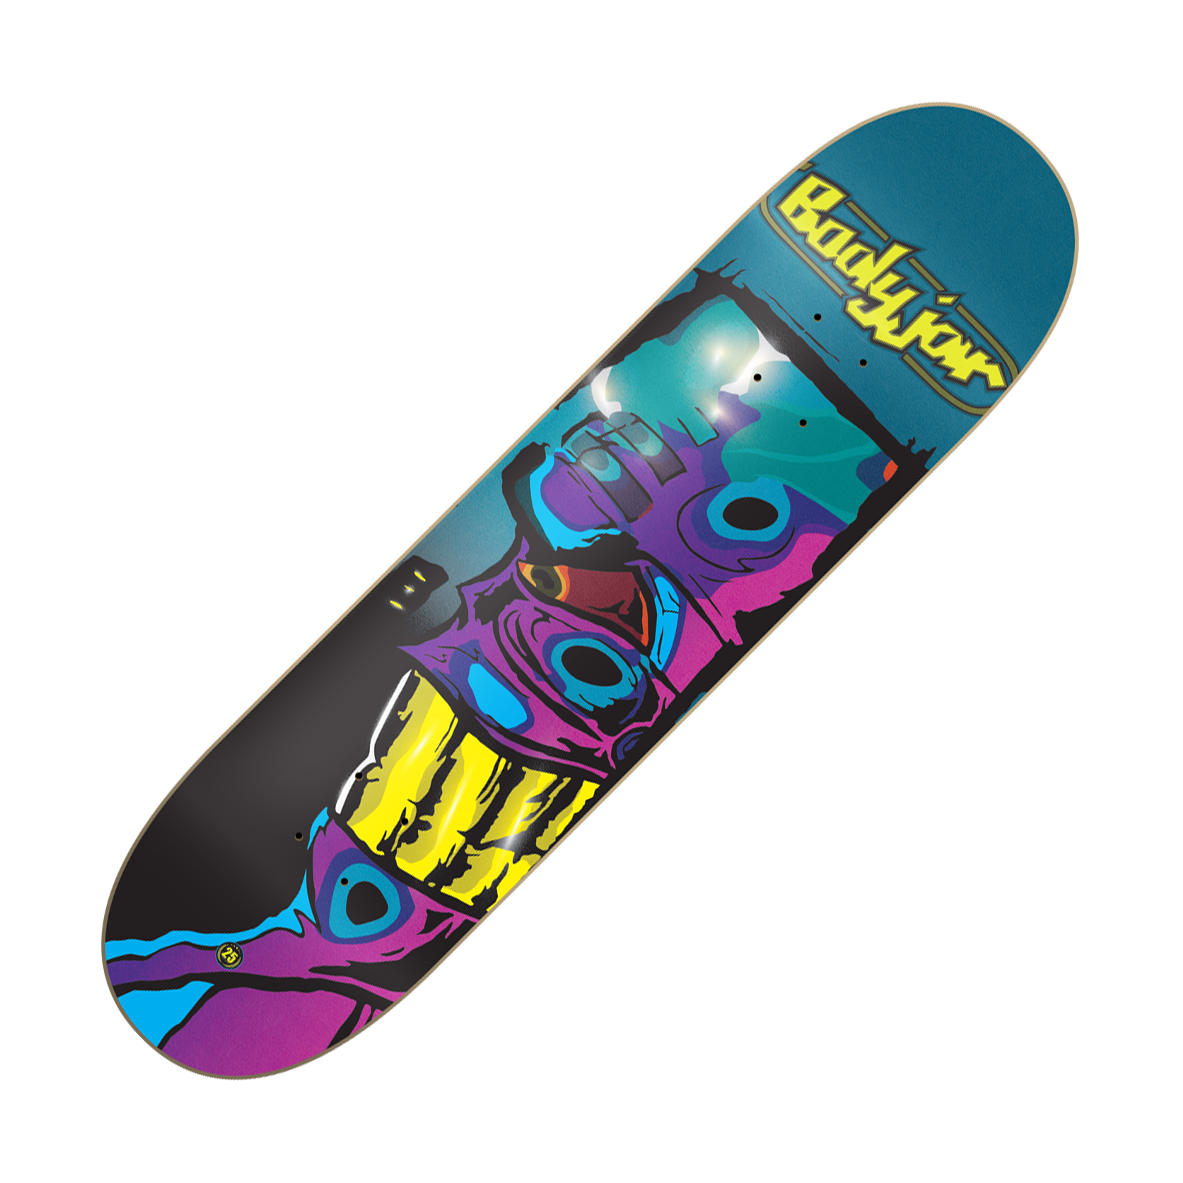 BODYJAR - "Rimshot!" (Skateboard Deck)